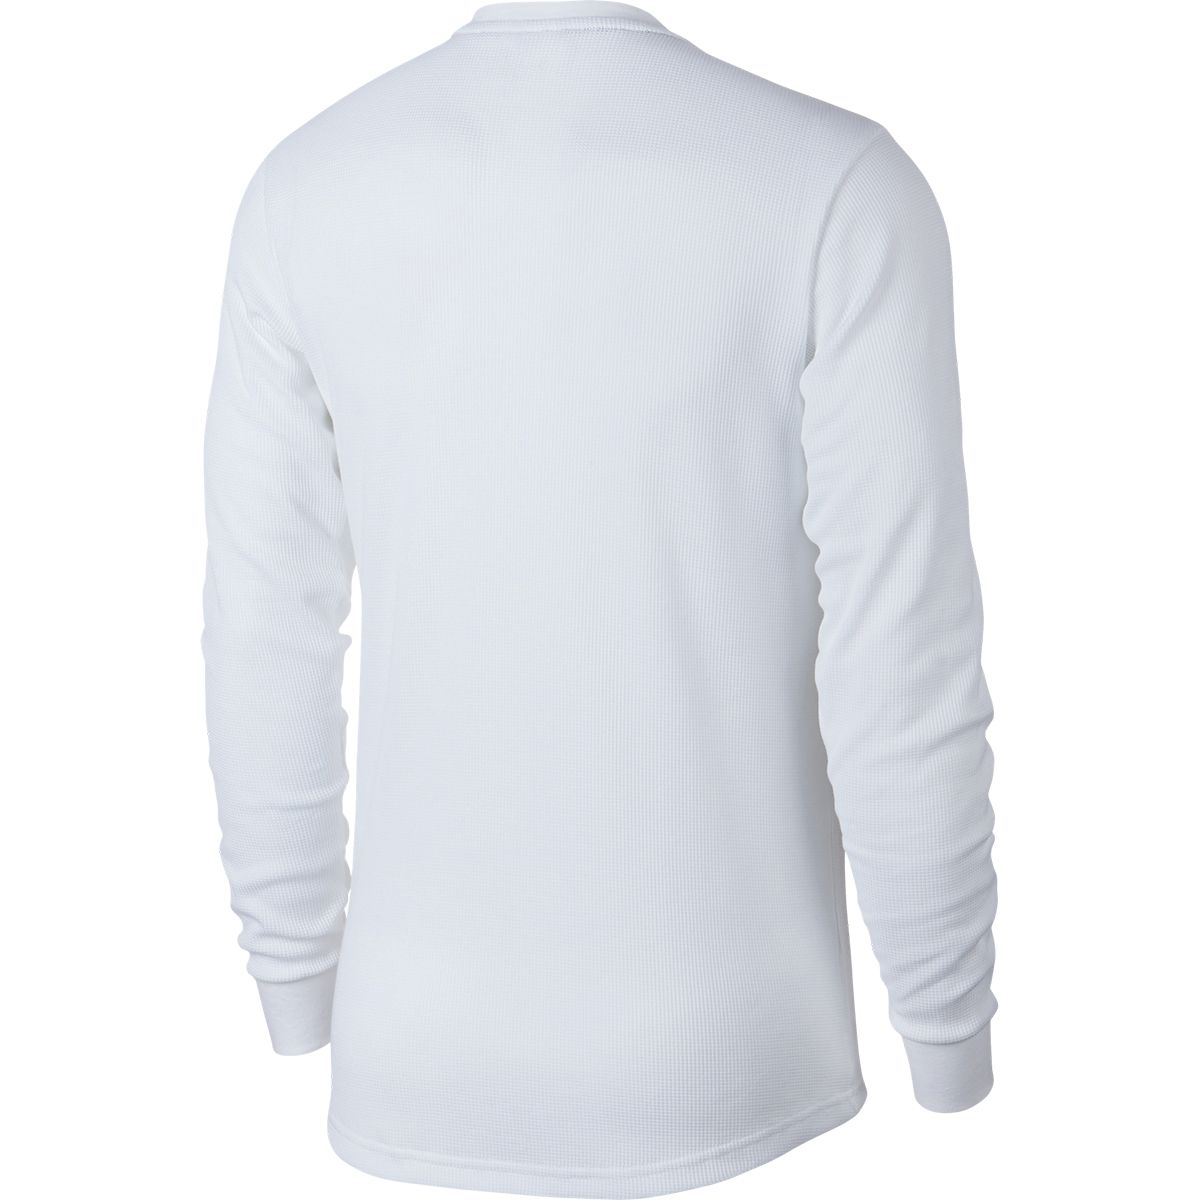 Nike SB Thermal Henley Shirt - Men's | Backcountry.com